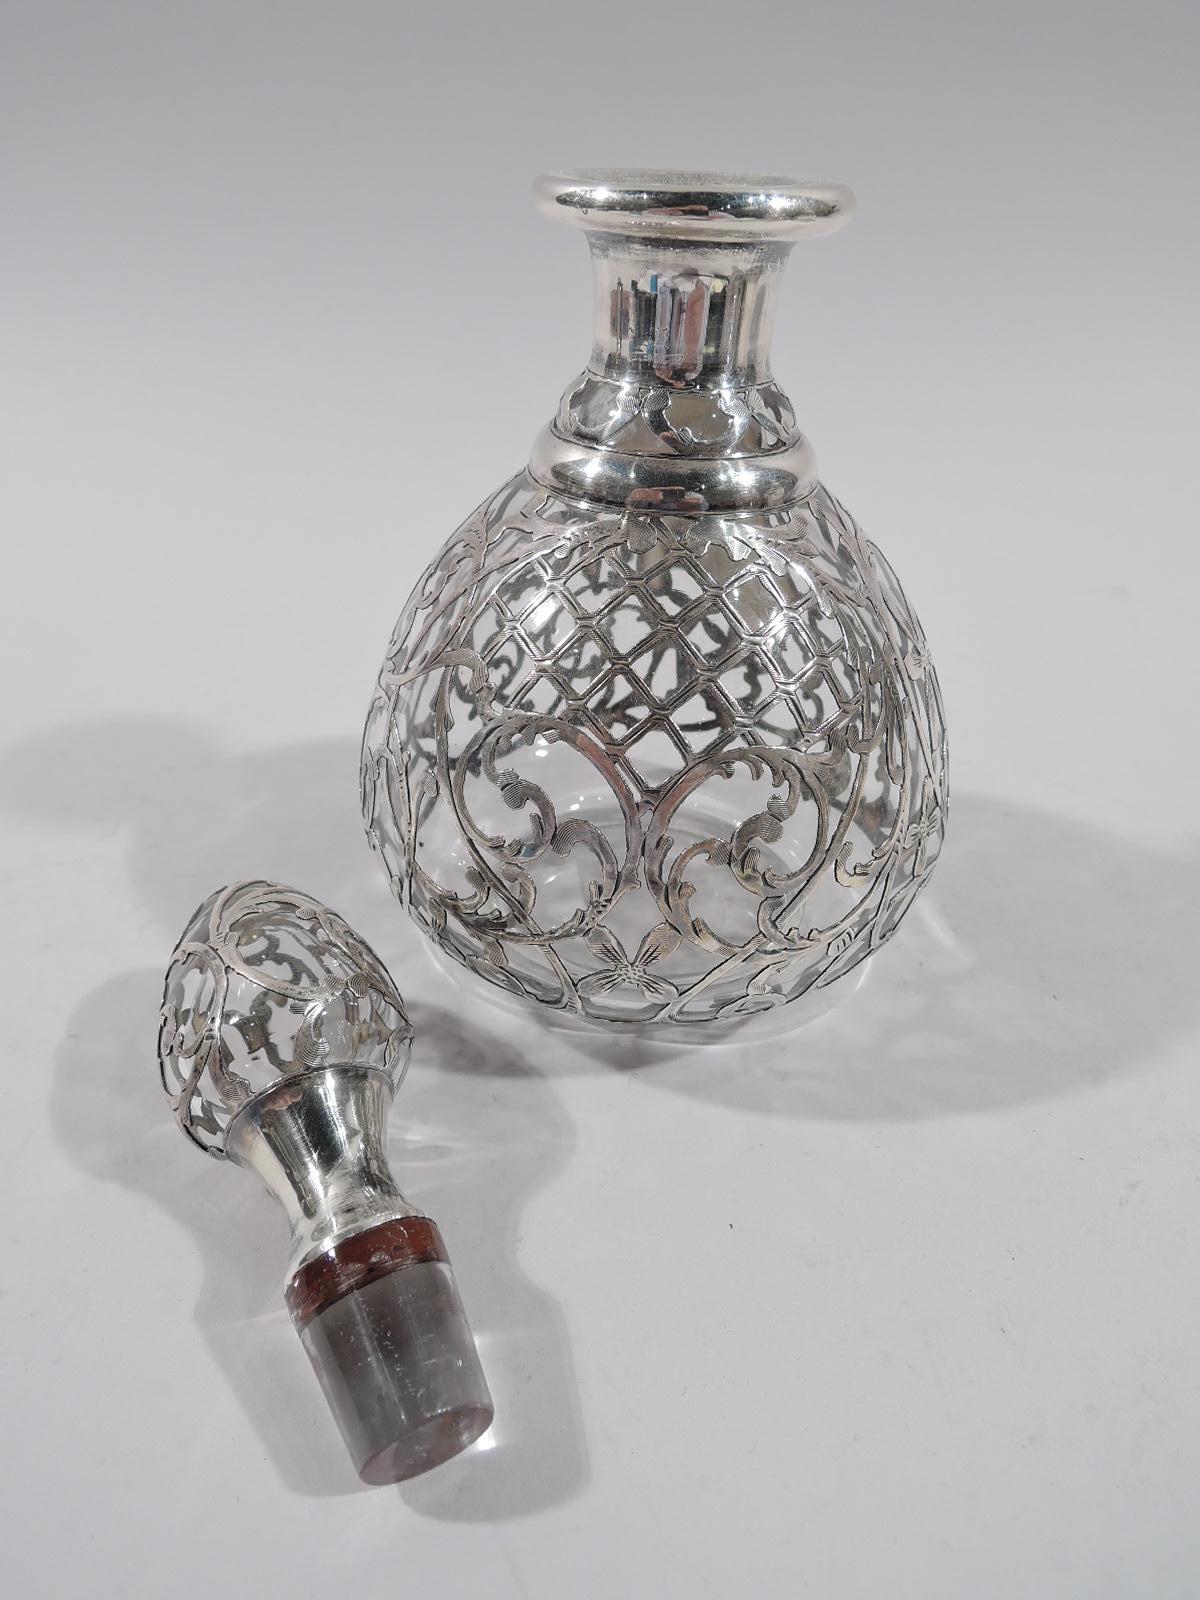 North American Antique American Art Nouveau Silver Overlay Perfume